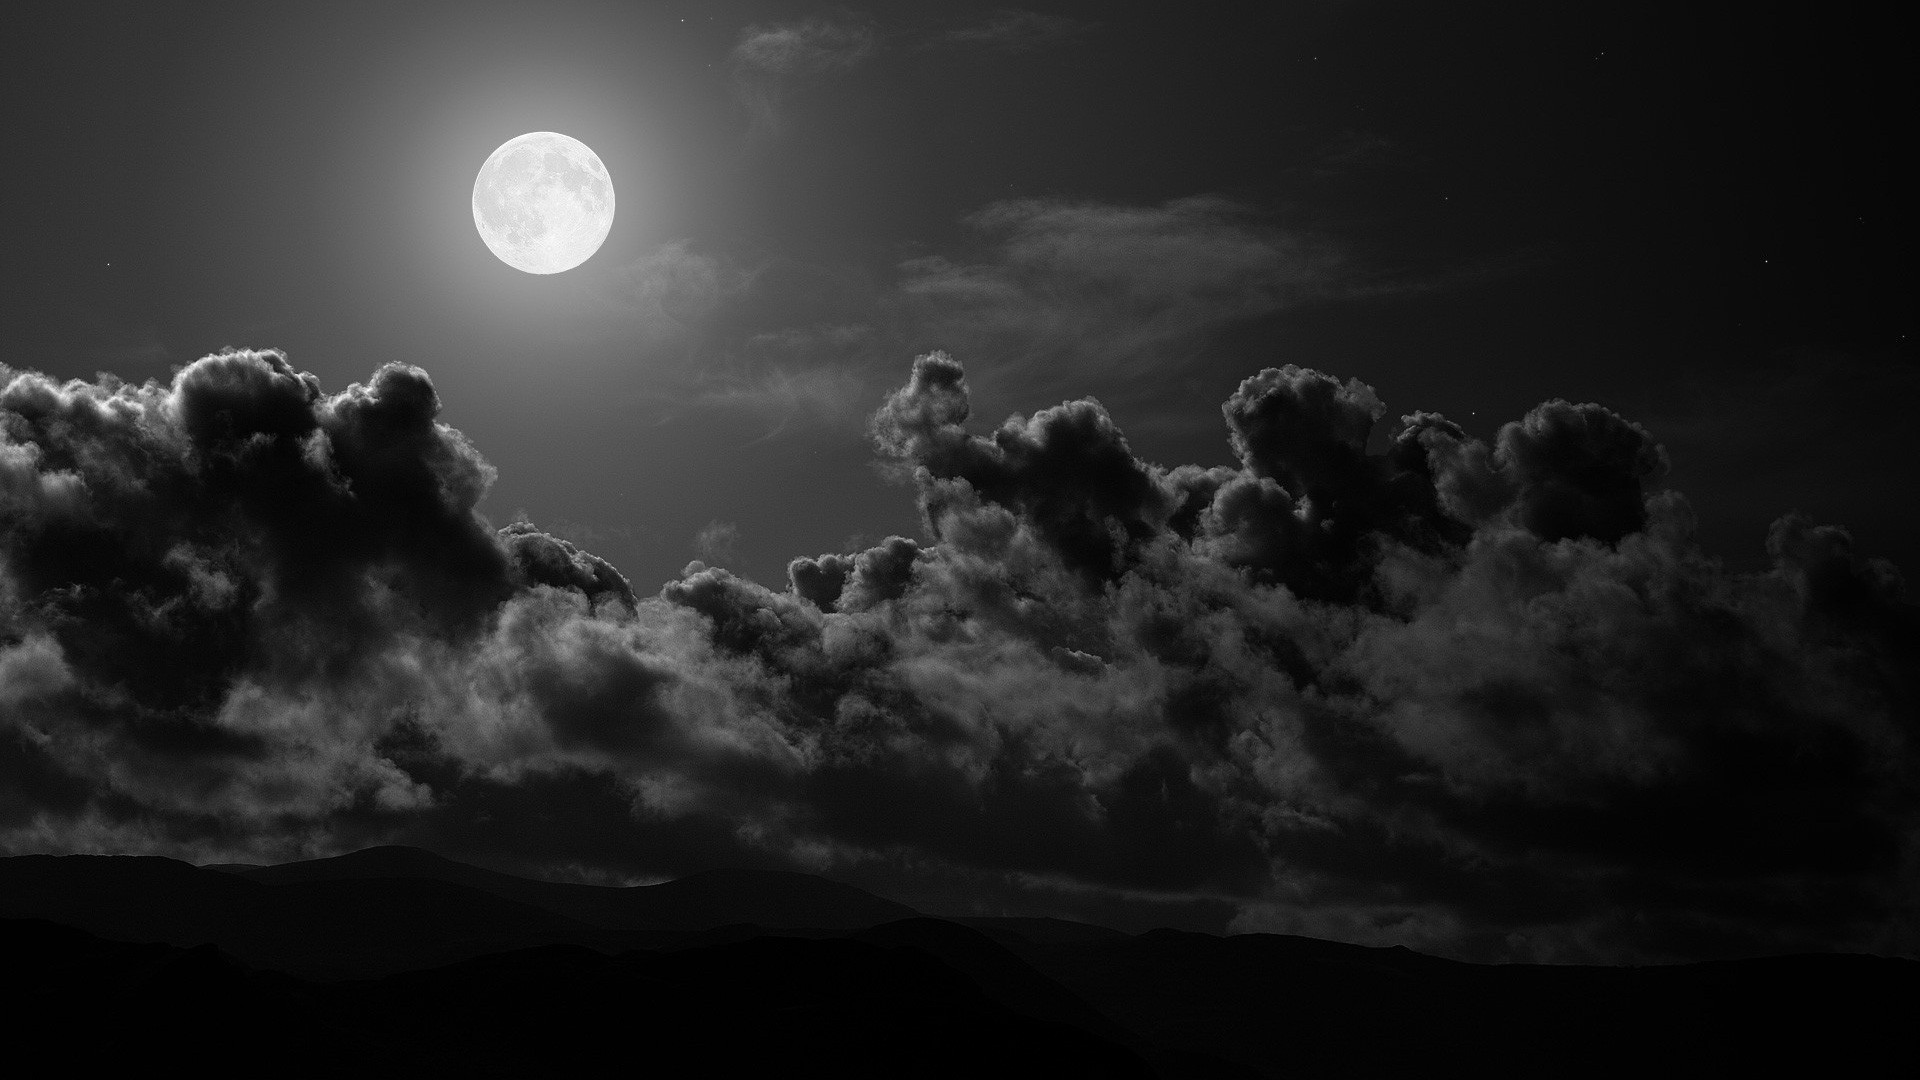 General 1920x1080 clouds monochrome nature landscape hills Moon moonlight night silhouette black digital art full moon